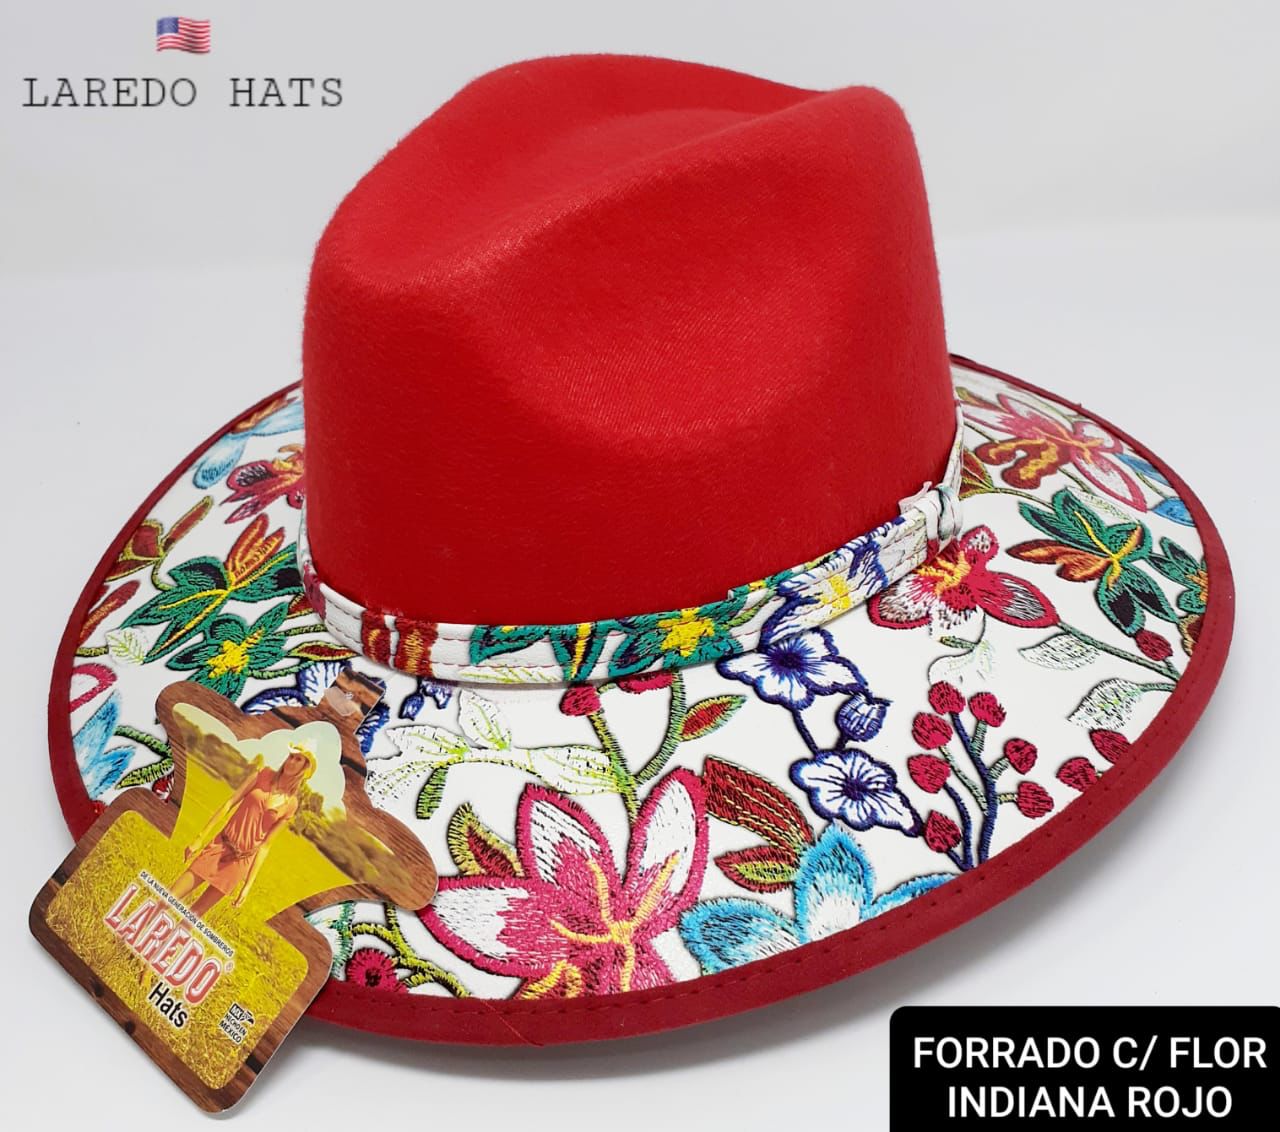 Sombrero Forrado con Flor Indiana 0200 Laredo Hats Dama Laredo Hats